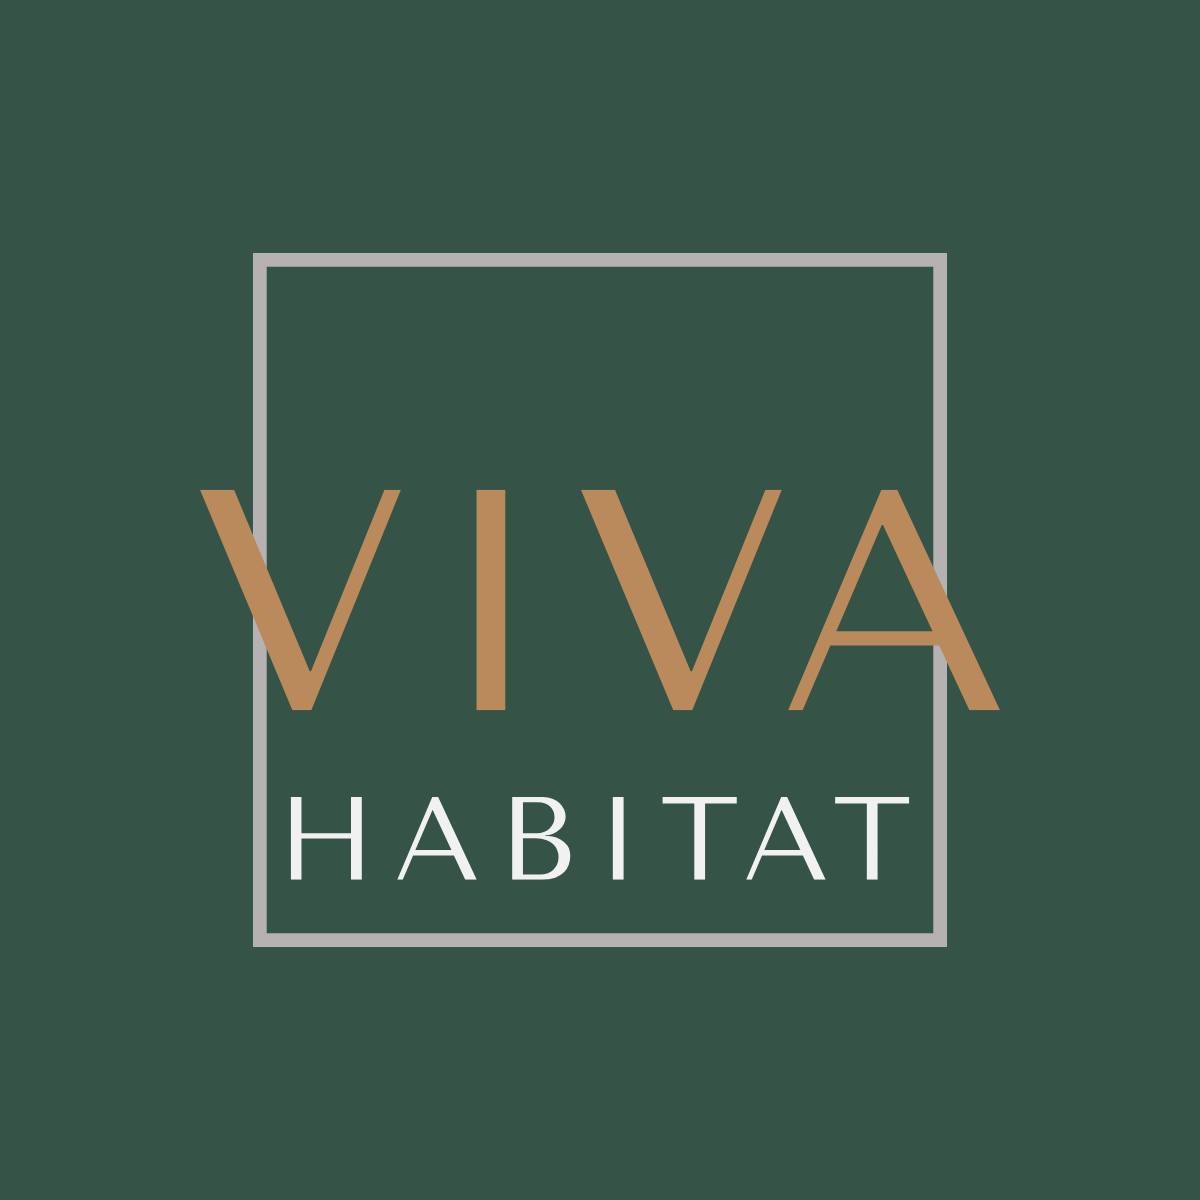 Viva Habitat